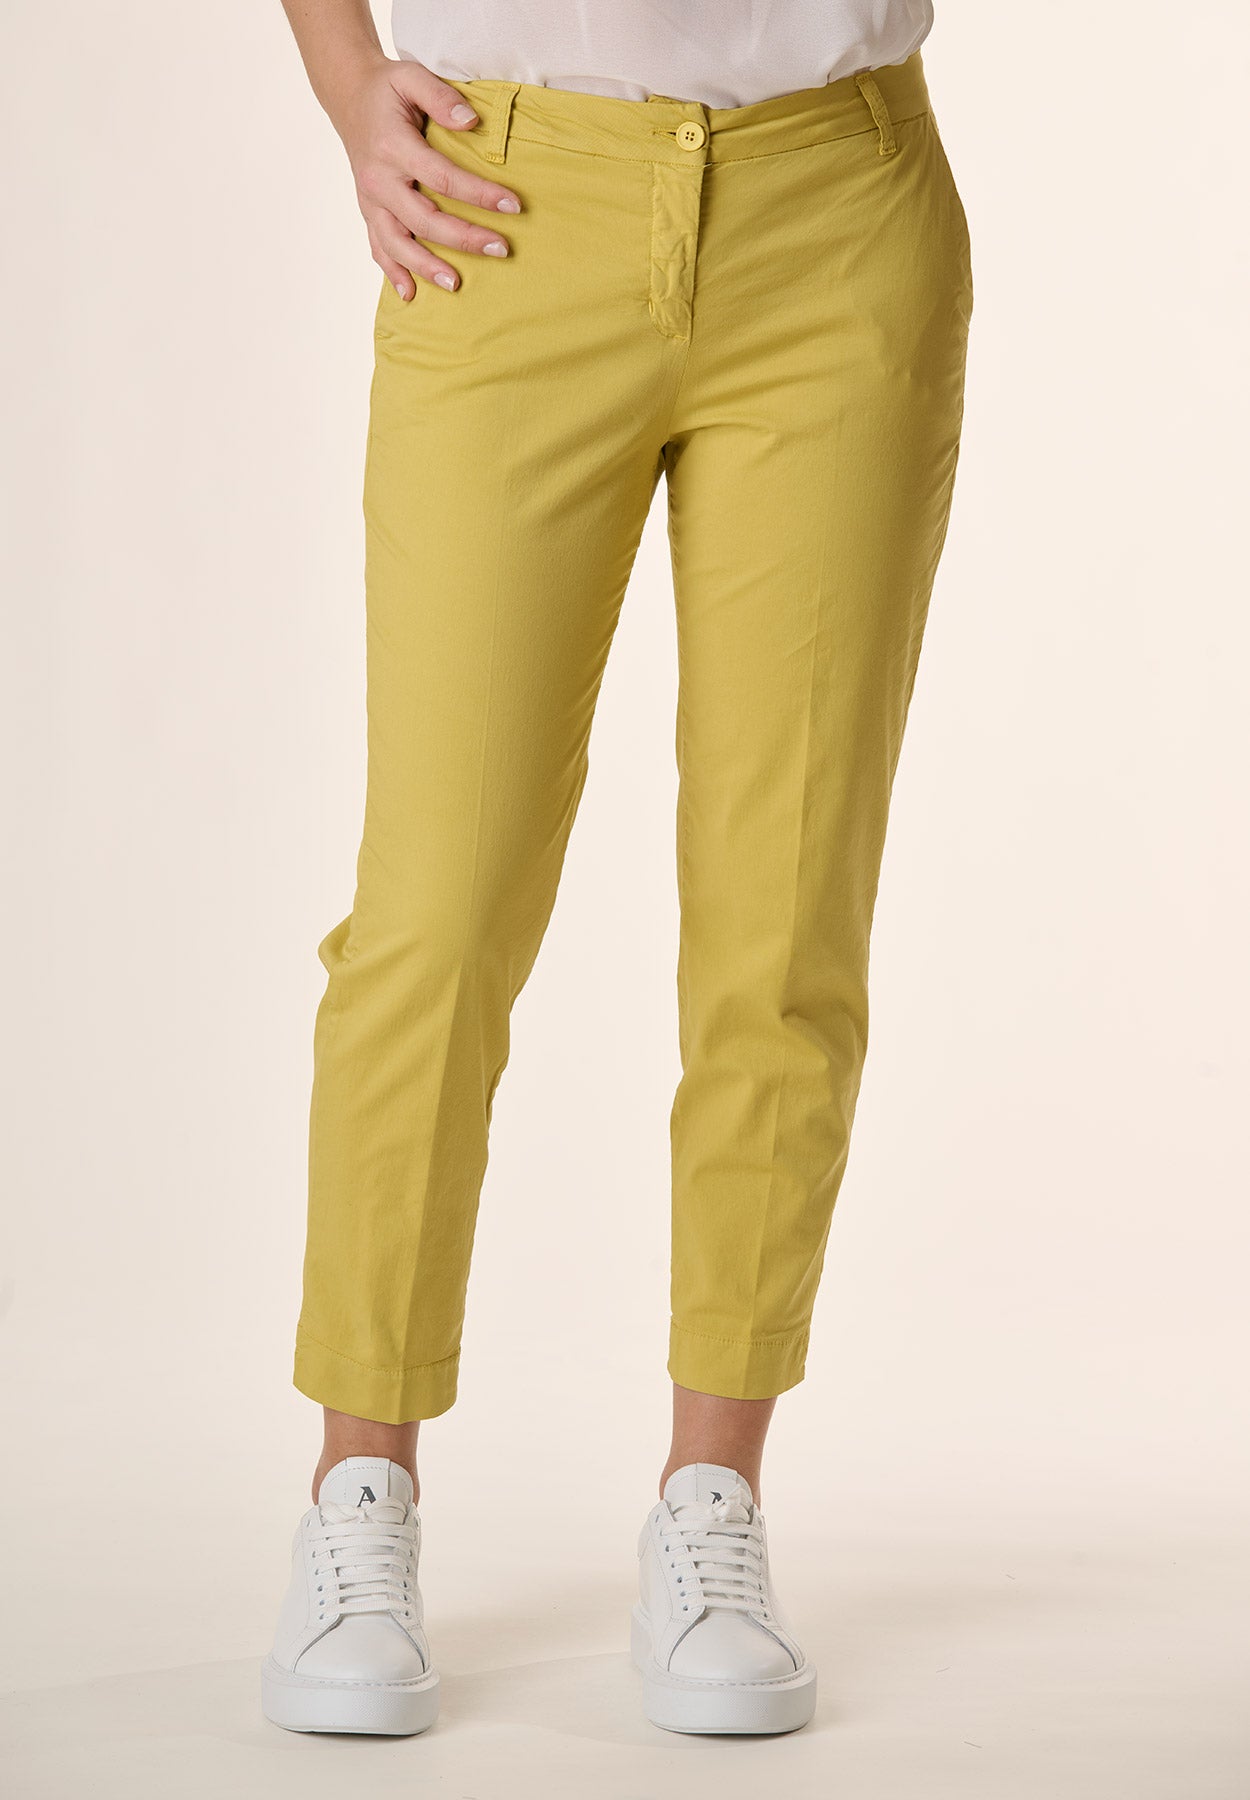 Pantalone chinos giallo cotone stretch